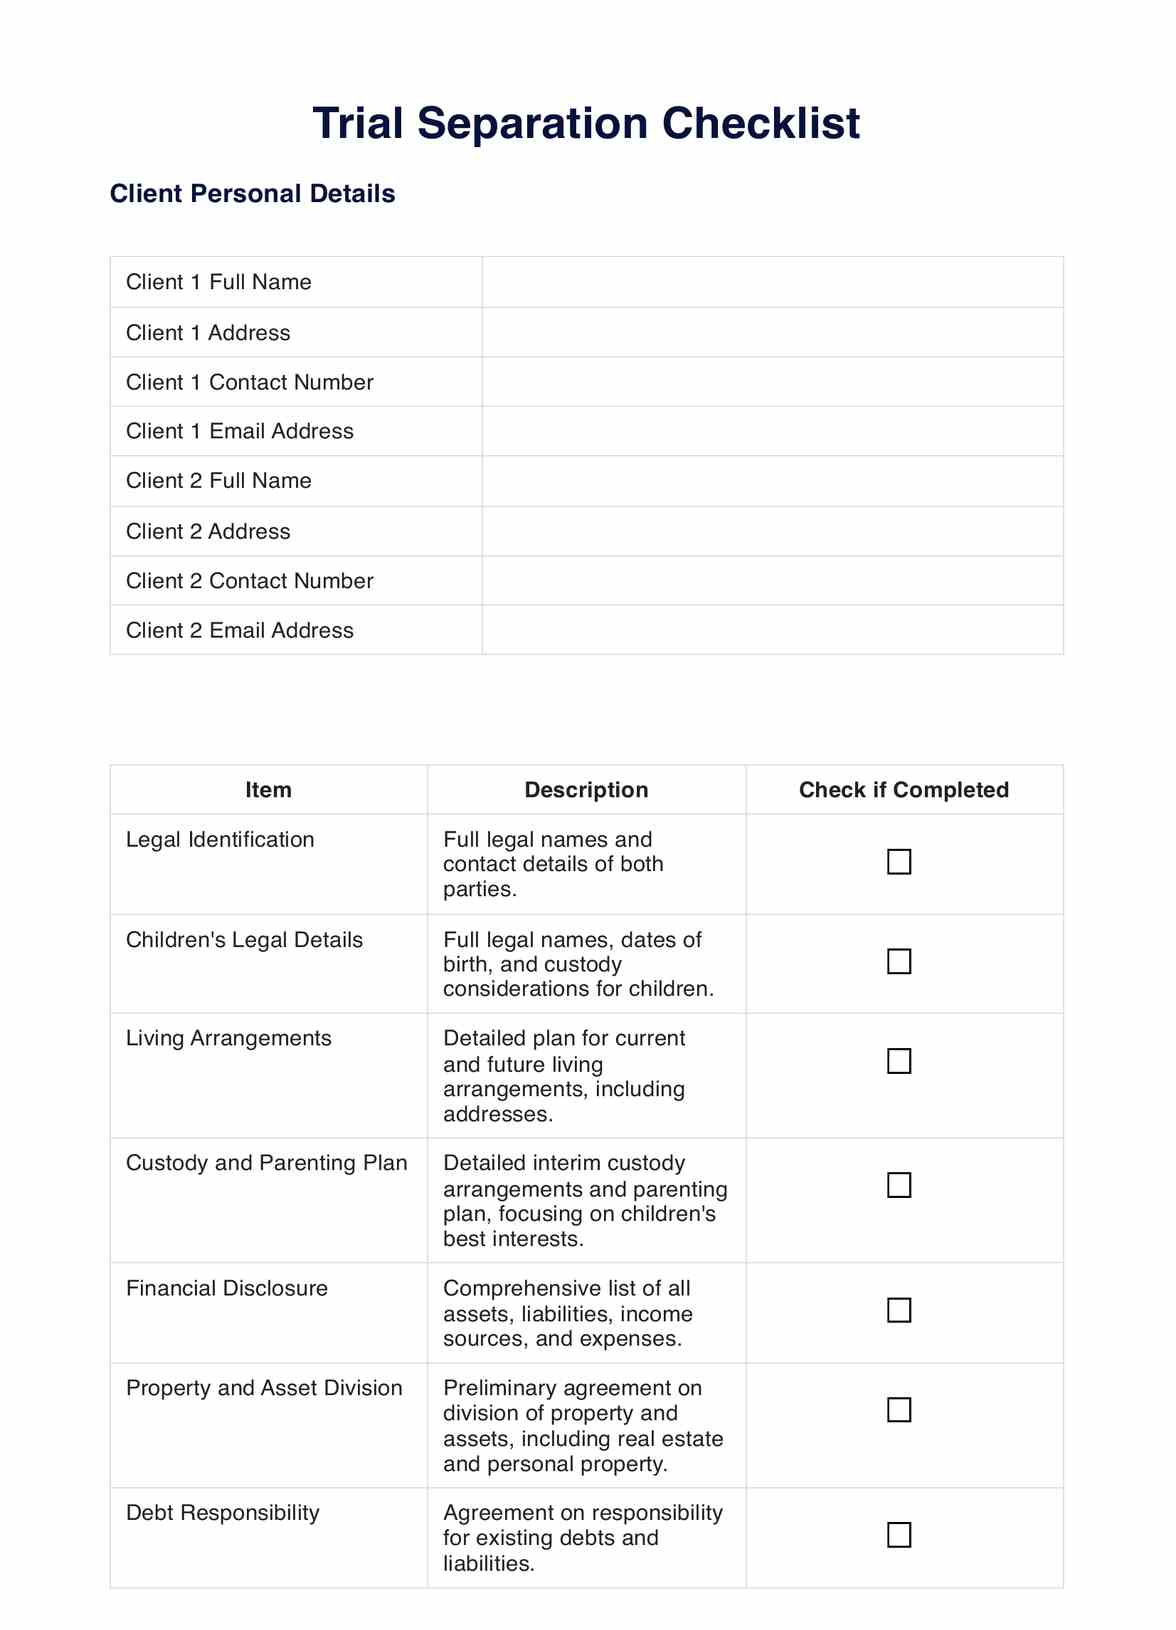 Trial Separation Checklist PDF Example